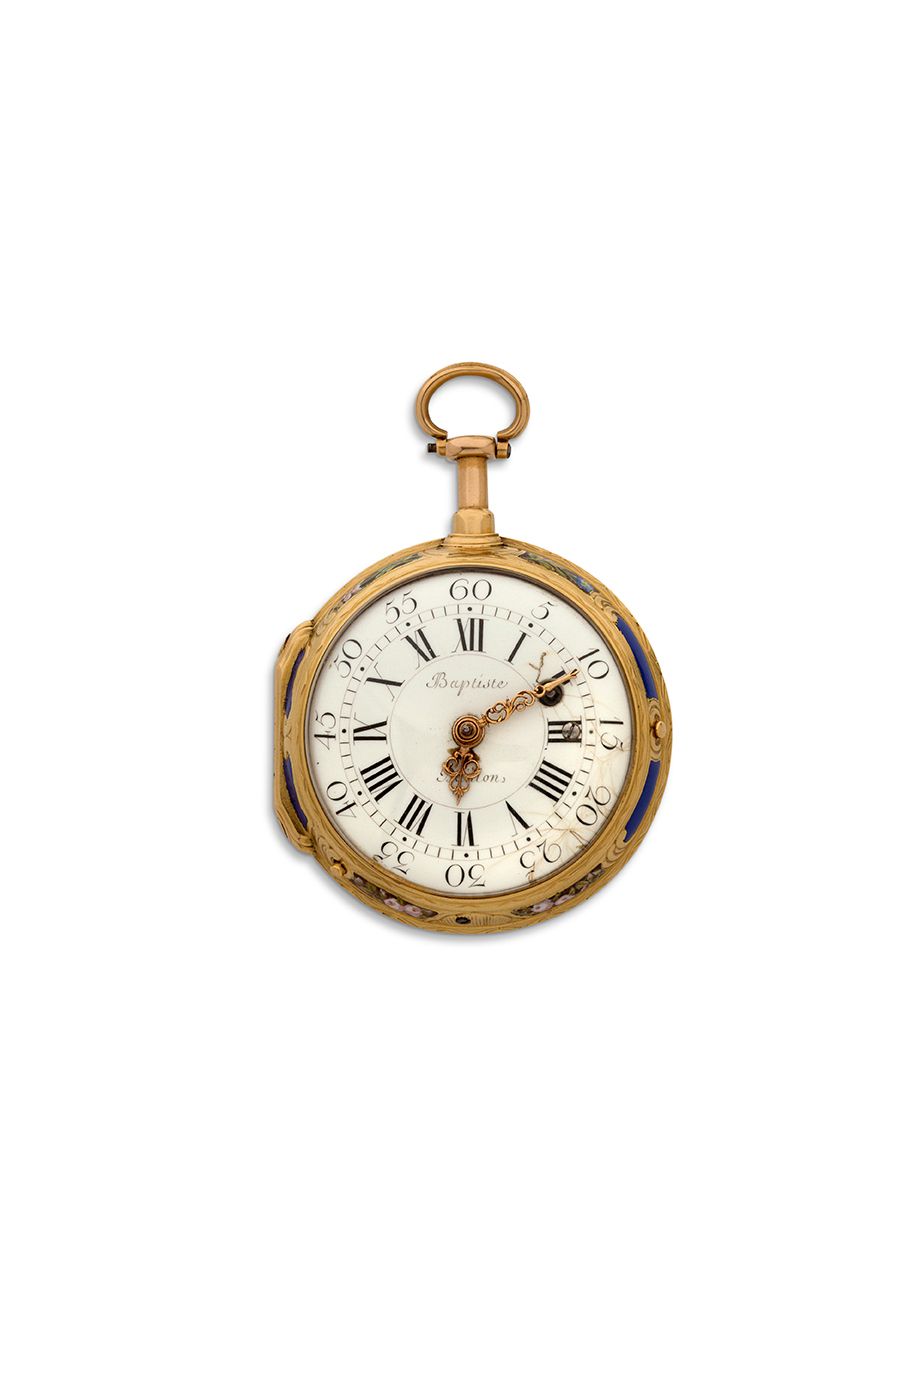 BAPTISTE BAILLON, Paris 
Nº 3844



Reloj de oro esmaltado con mecanismo de sond&hellip;